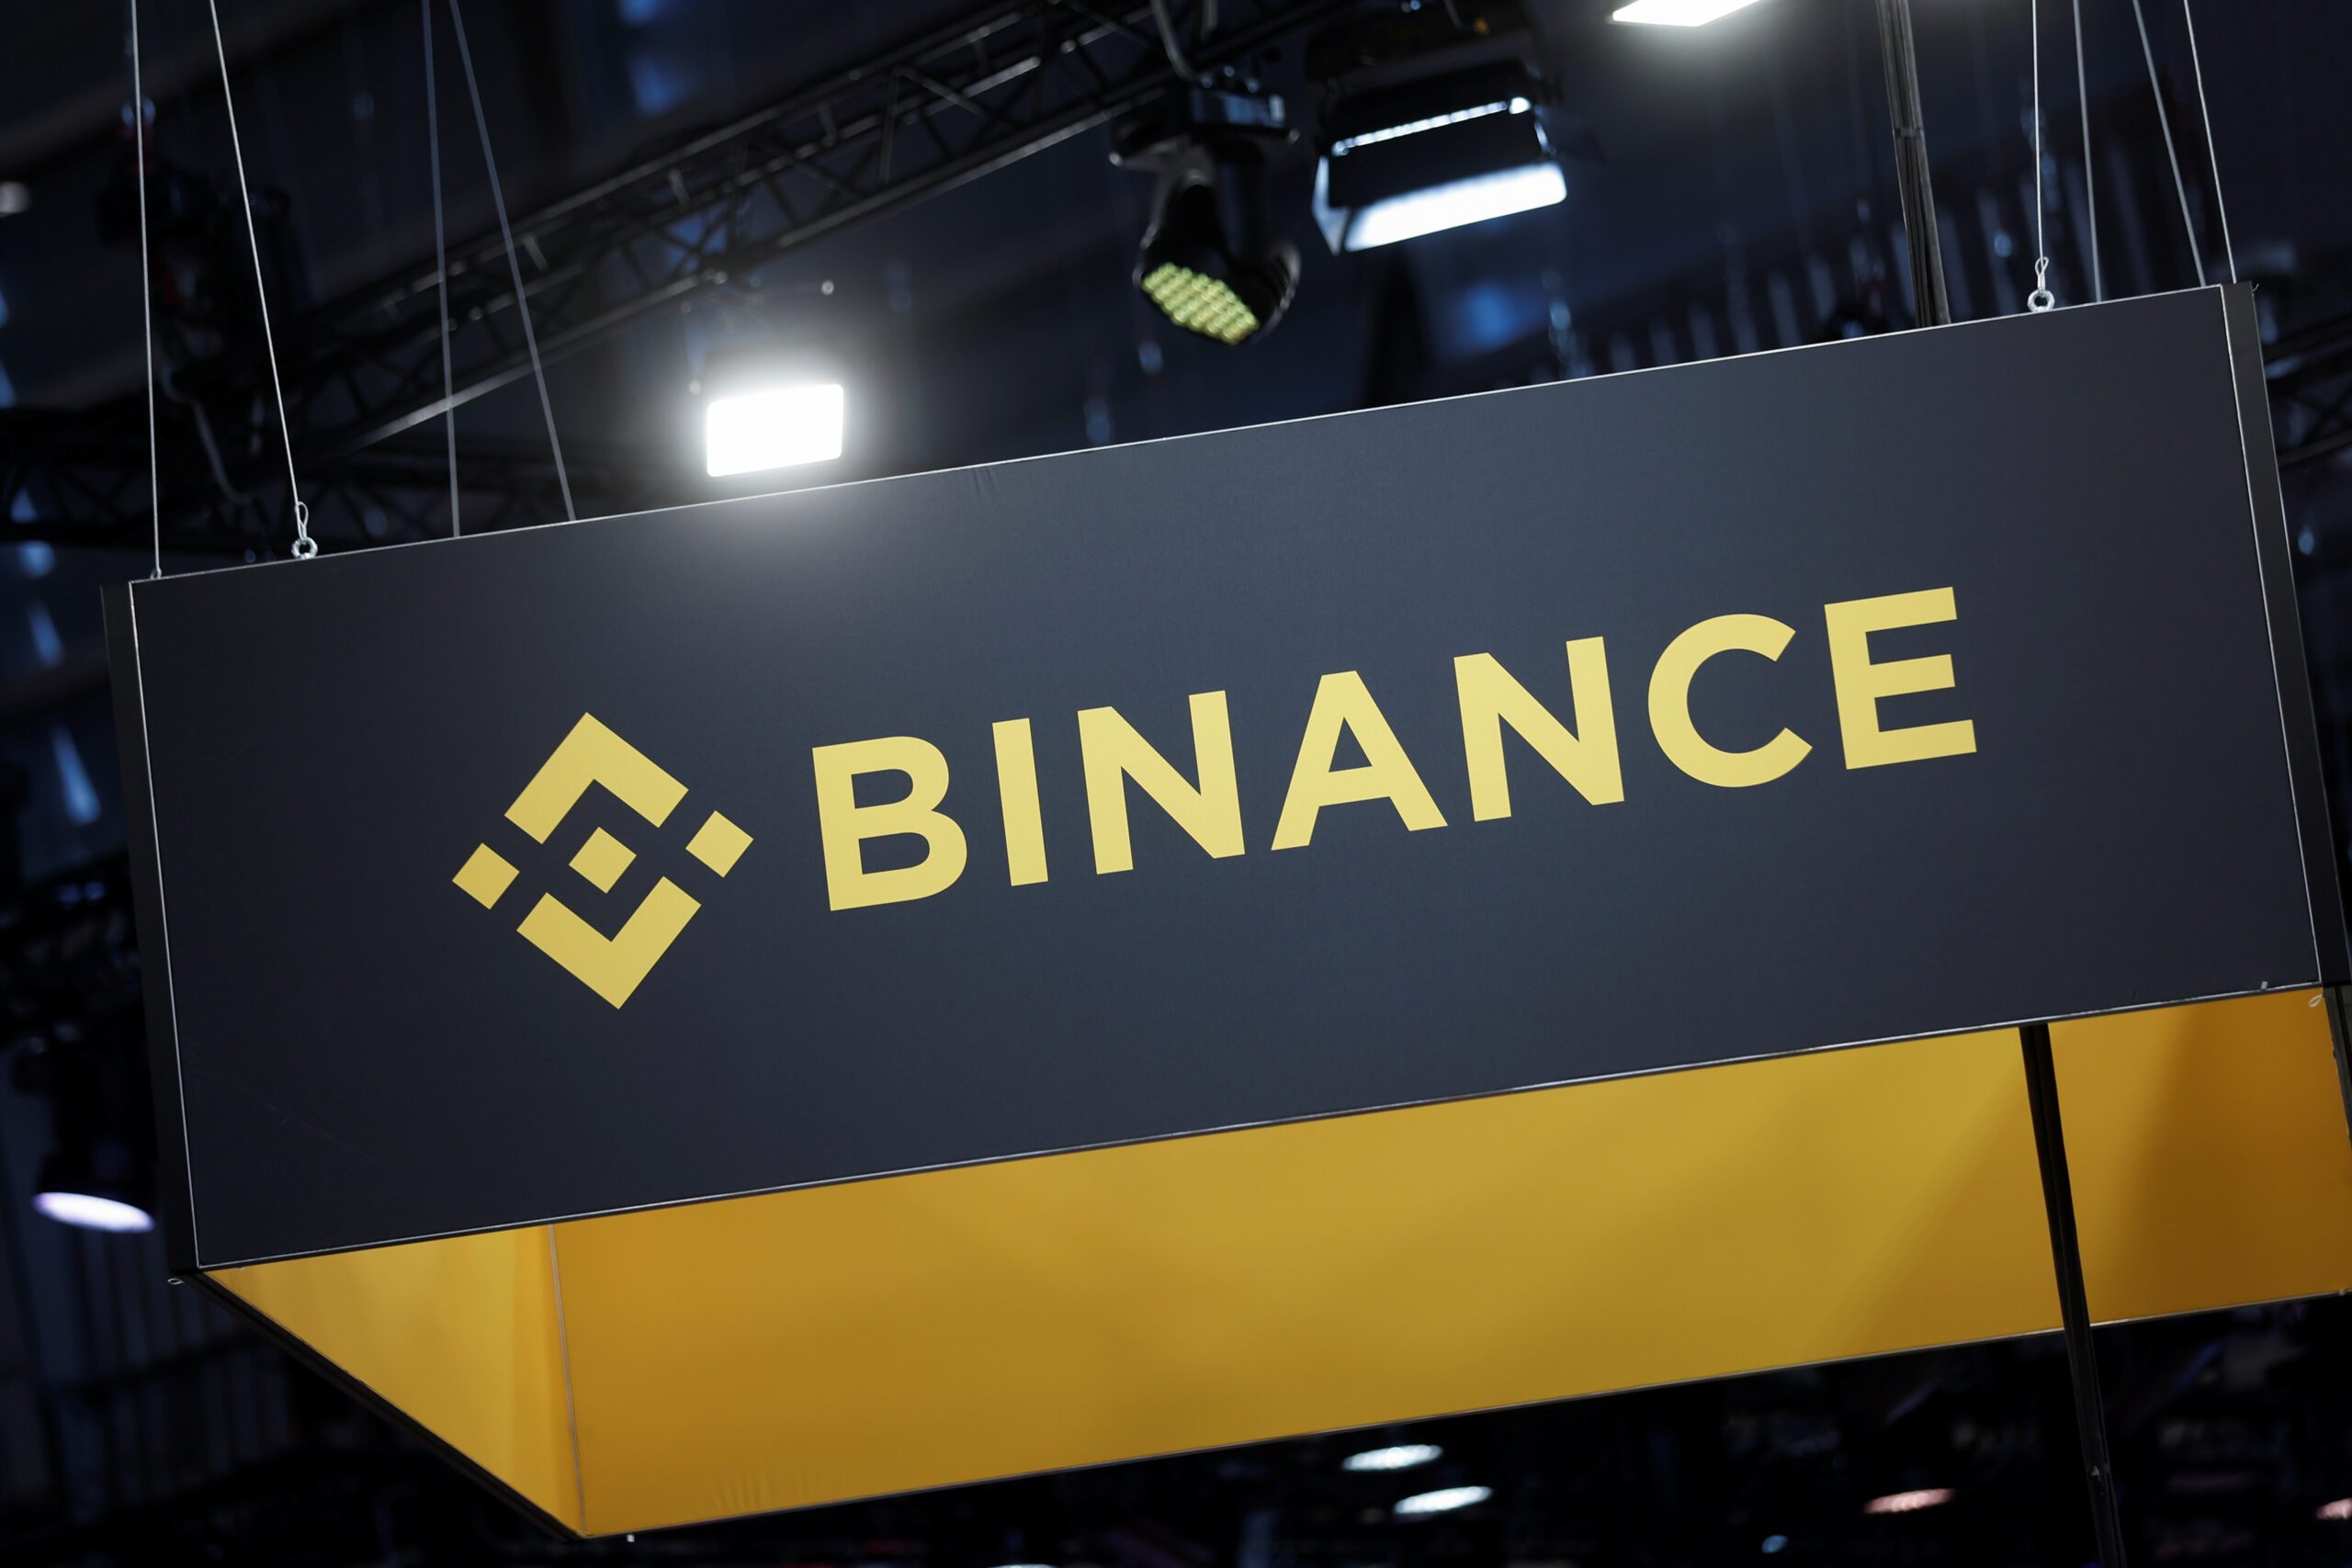 Binance.US to cut 100 jobs, CEO Brian Shroder to depart